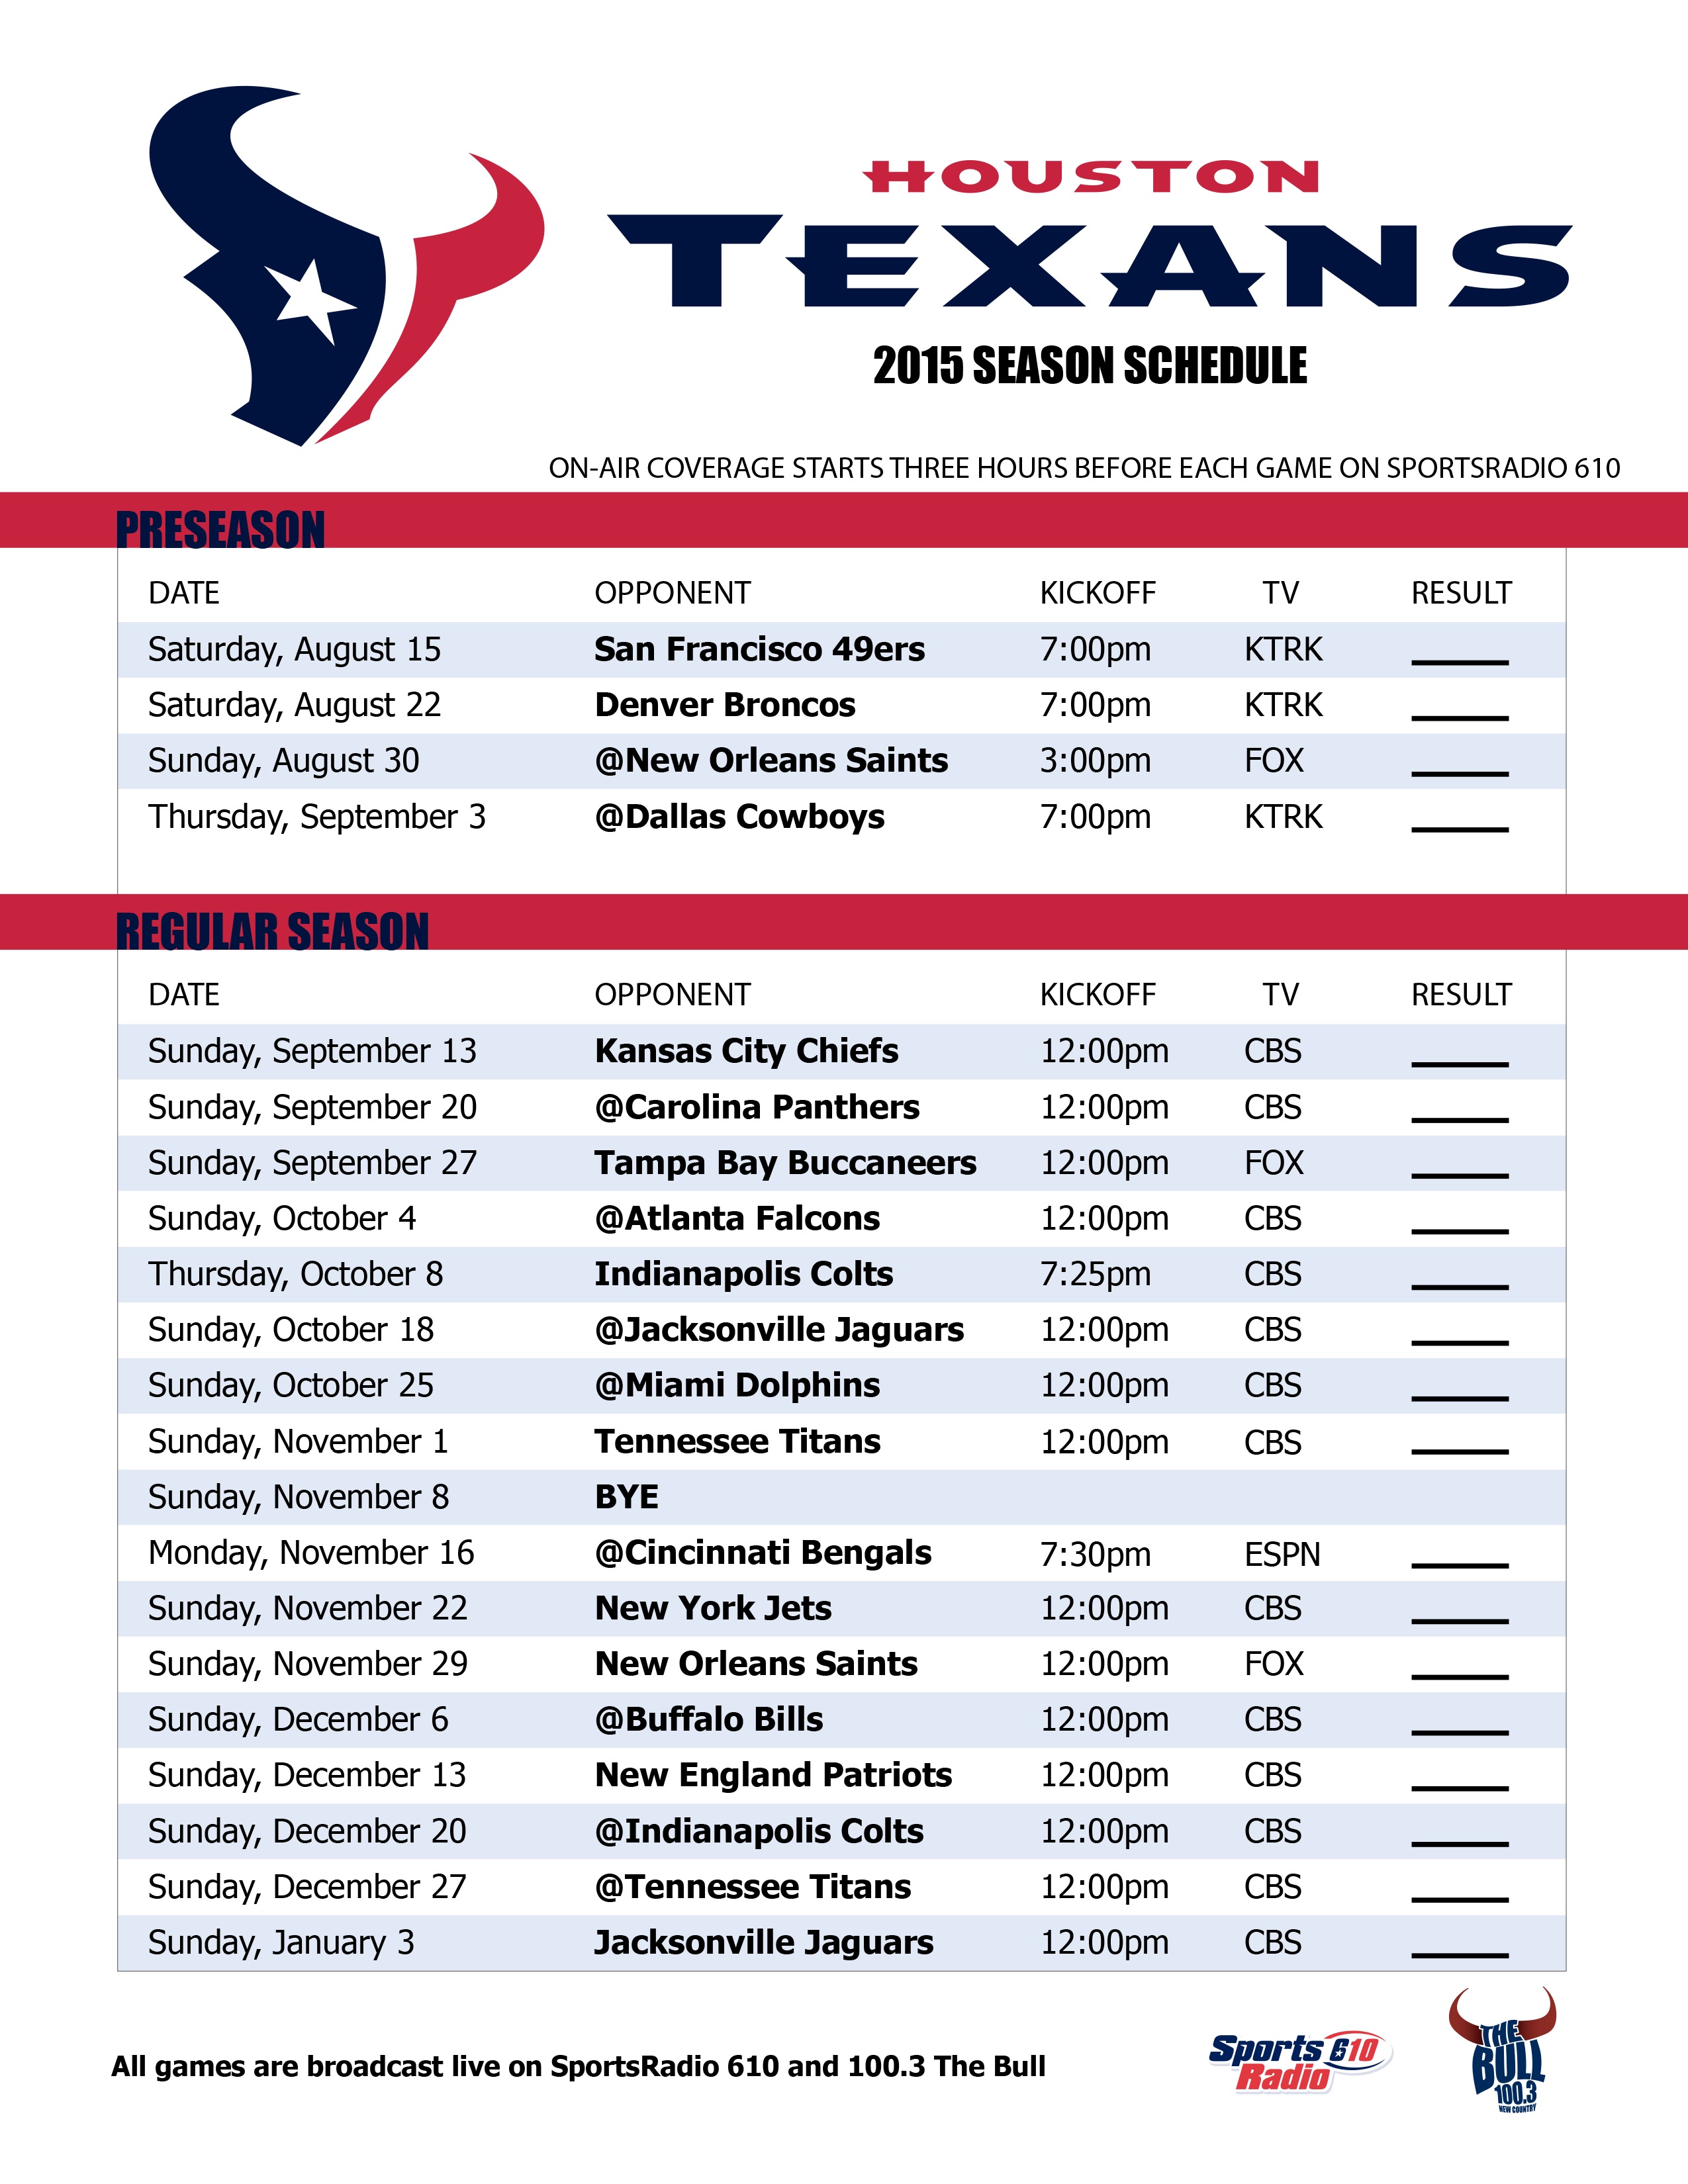 Cowboys, Texans to Open the 2015 Regular Season at Home - WTAW